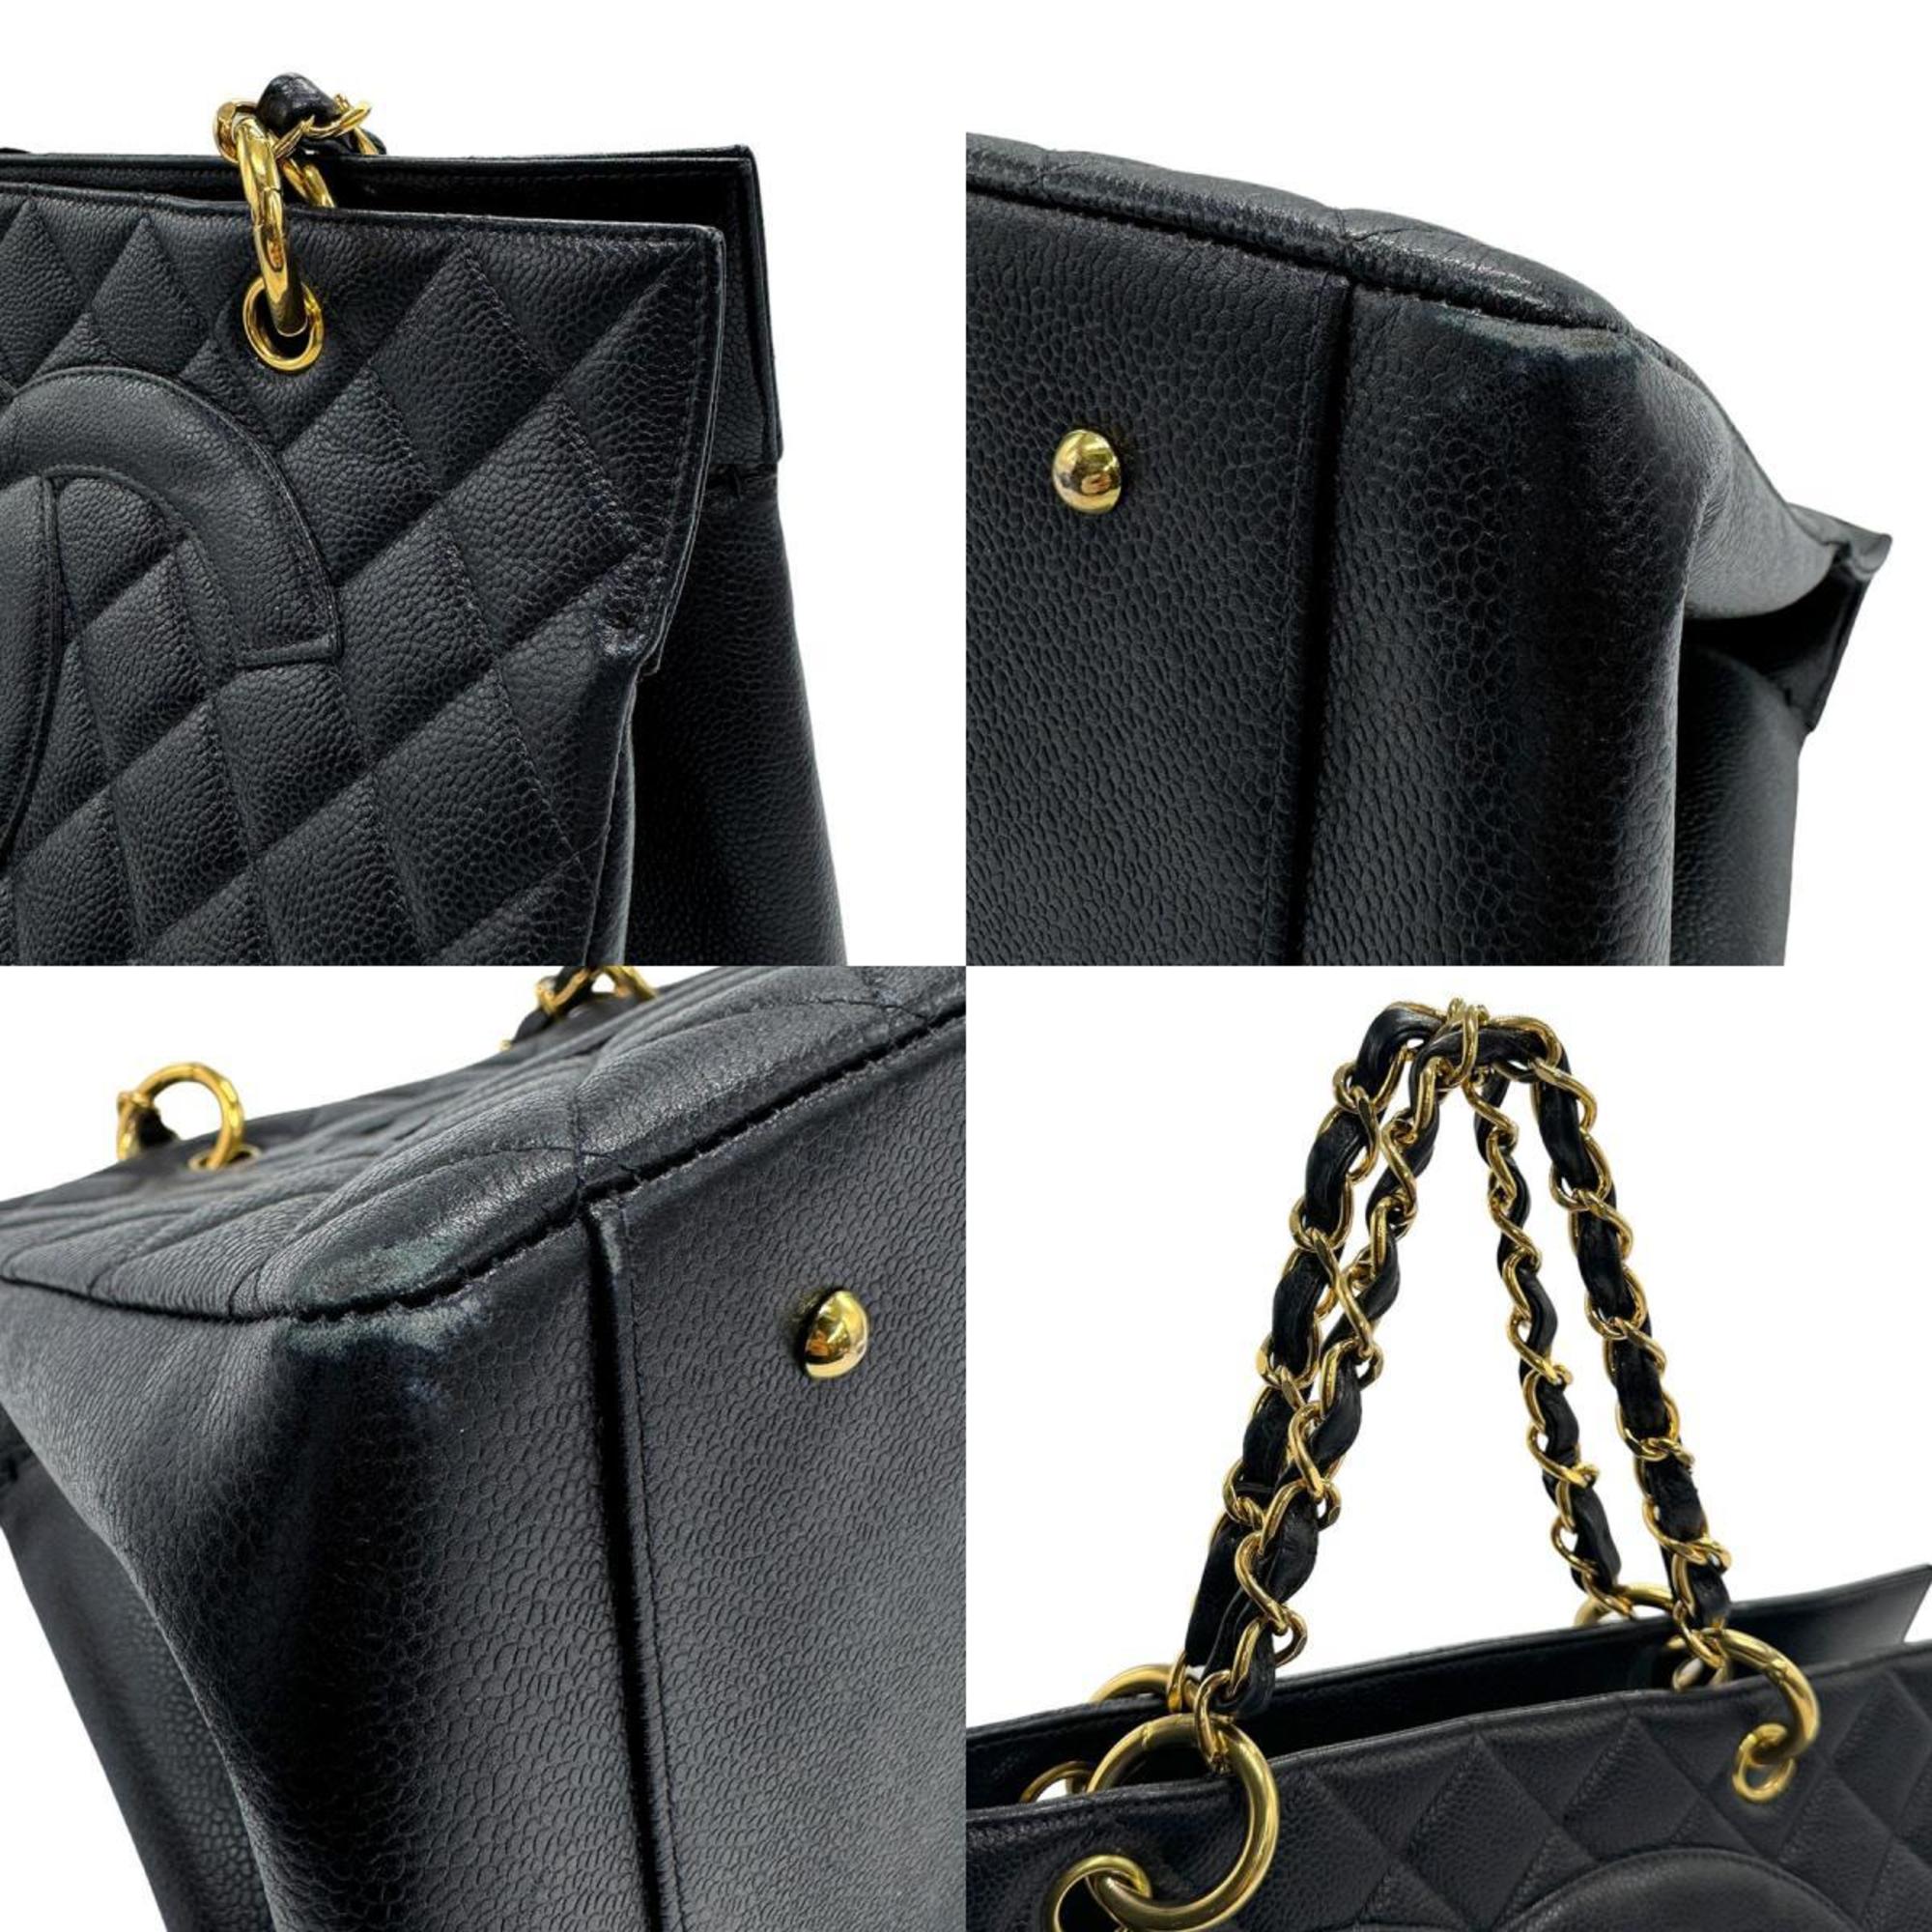 CHANEL Handbag Matelasse Caviar Skin Leather Black Gold Women's z1180